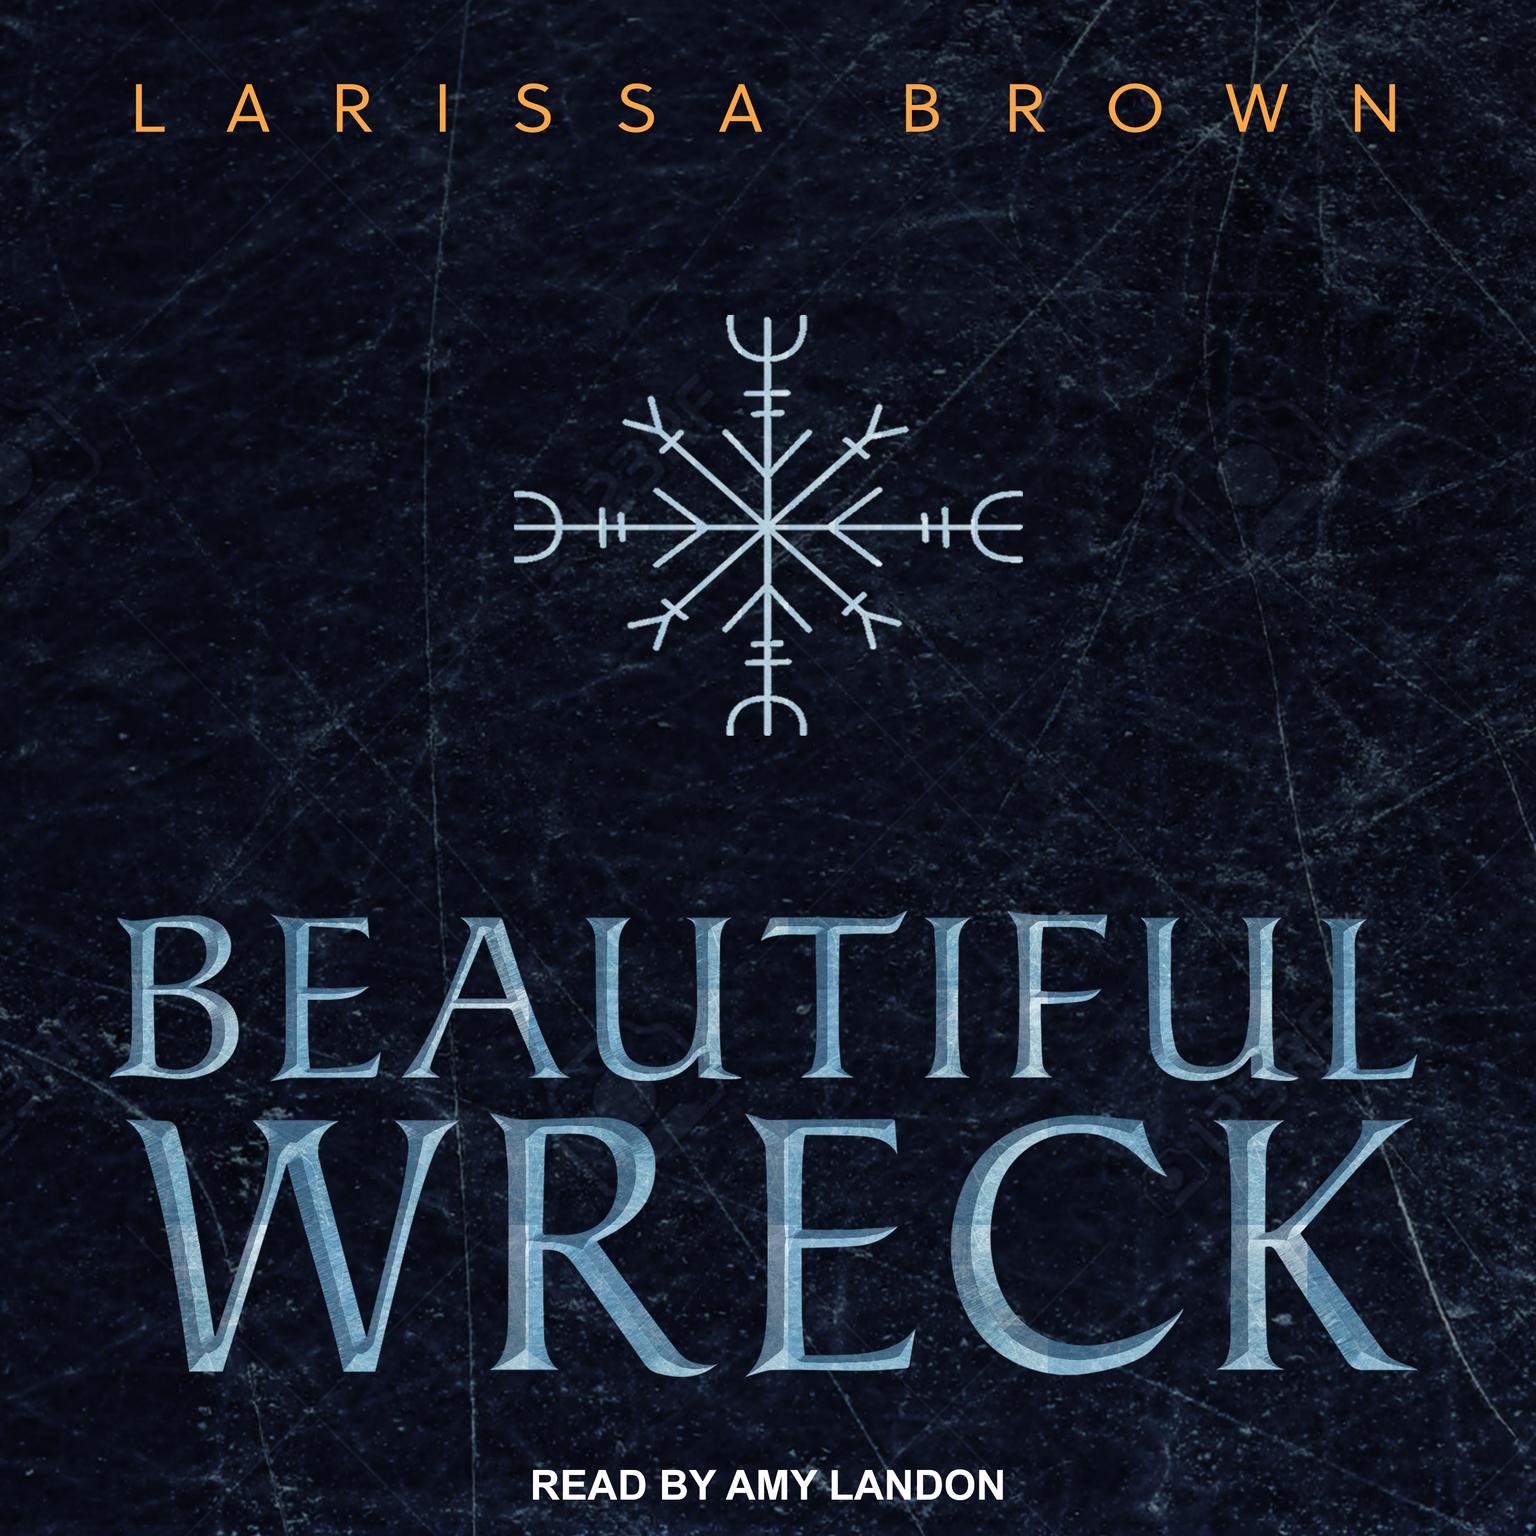 Beautiful Wreck Audiobook, by Larissa Brown